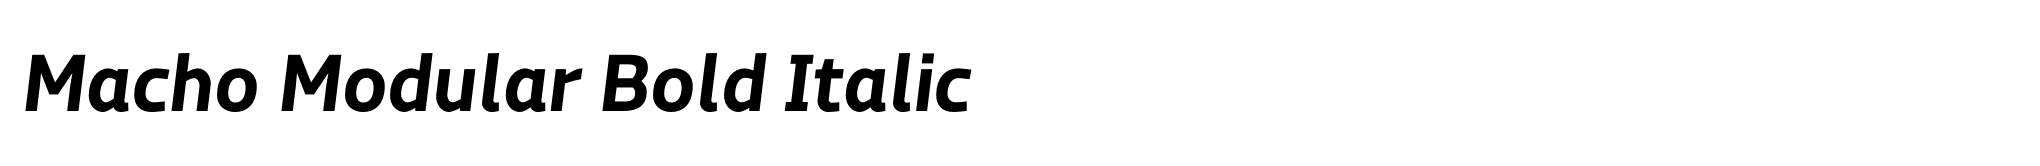 Macho Modular Bold Italic image